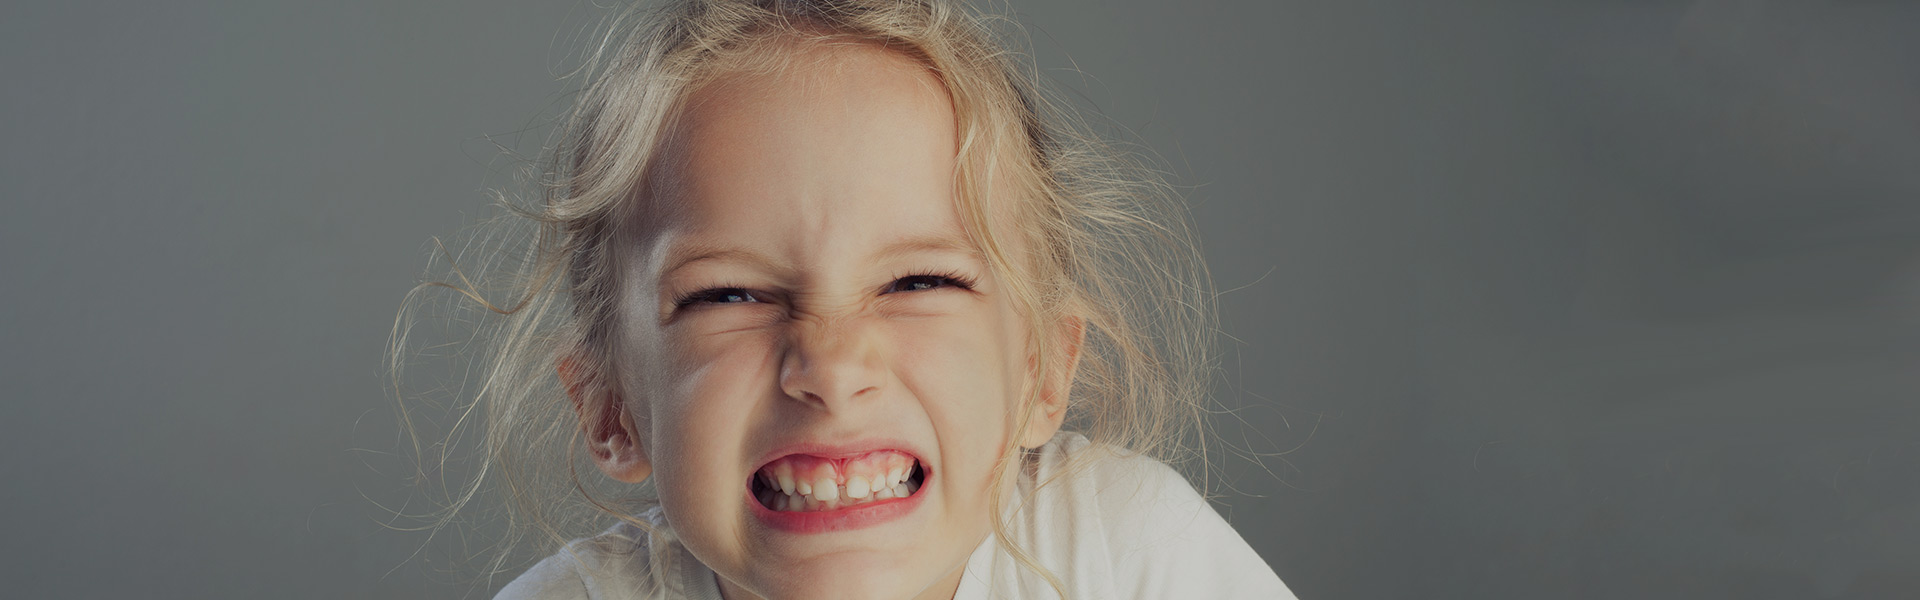 Teeth Grinding in Children Kids